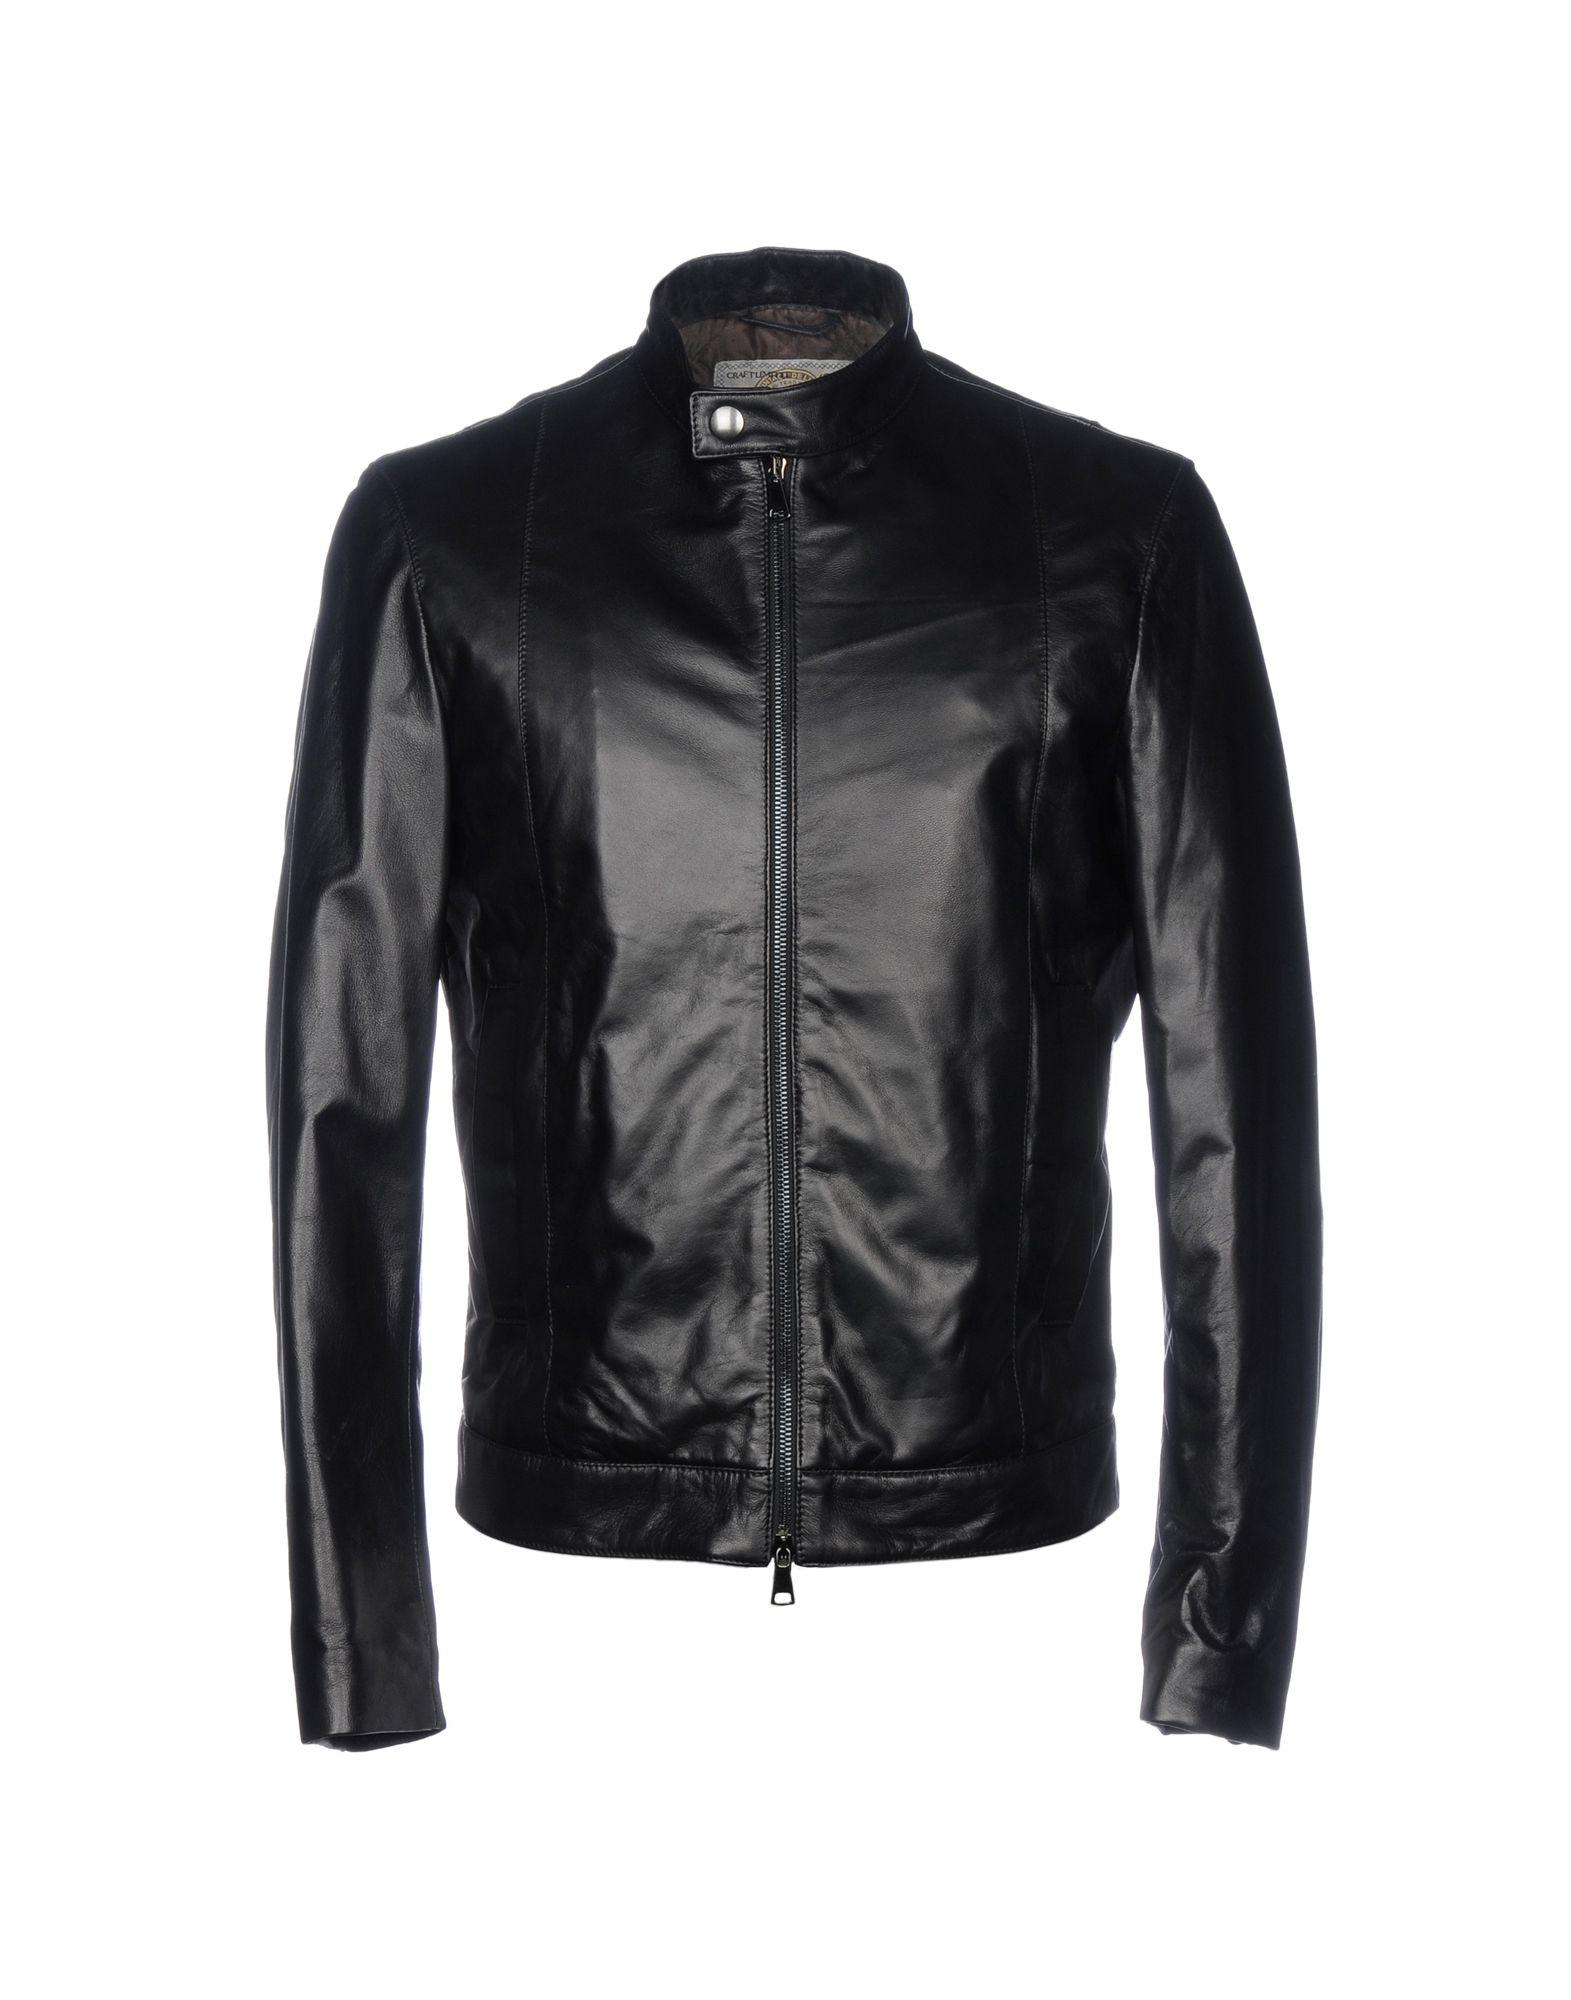 Vintage De Luxe Leather Jacket in Black for Men - Lyst